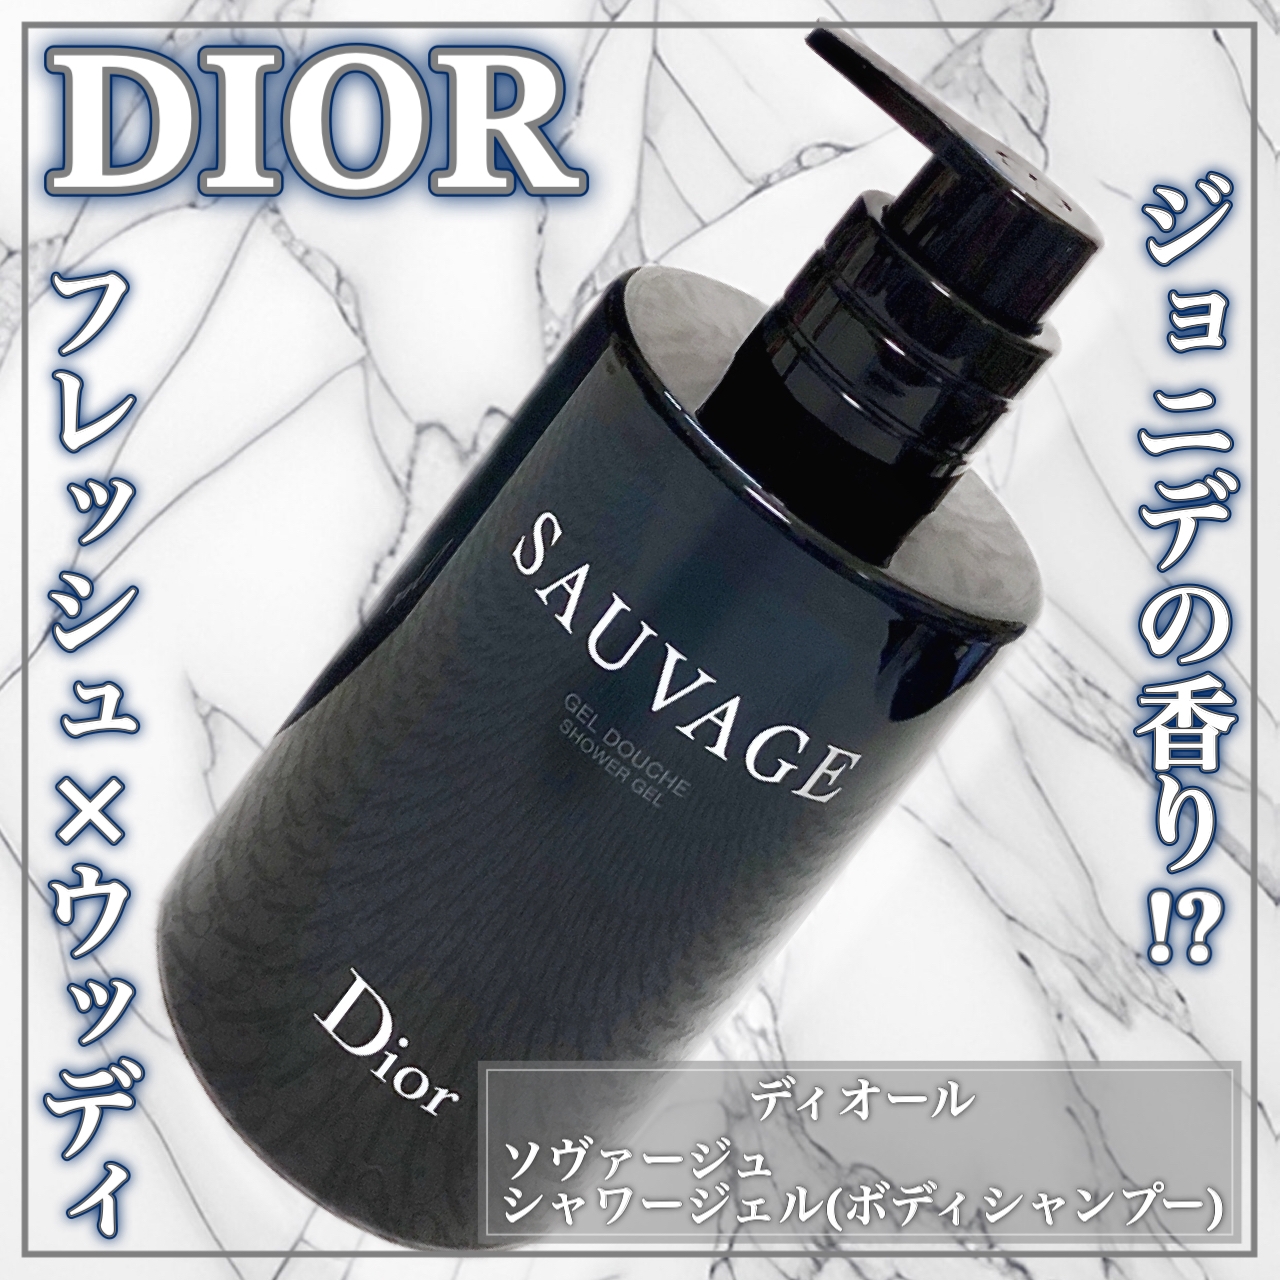 Dior(ディオール) ソヴァージュ シャワー ジェルの良い点・メリットに関するEririnさんの口コミ画像1